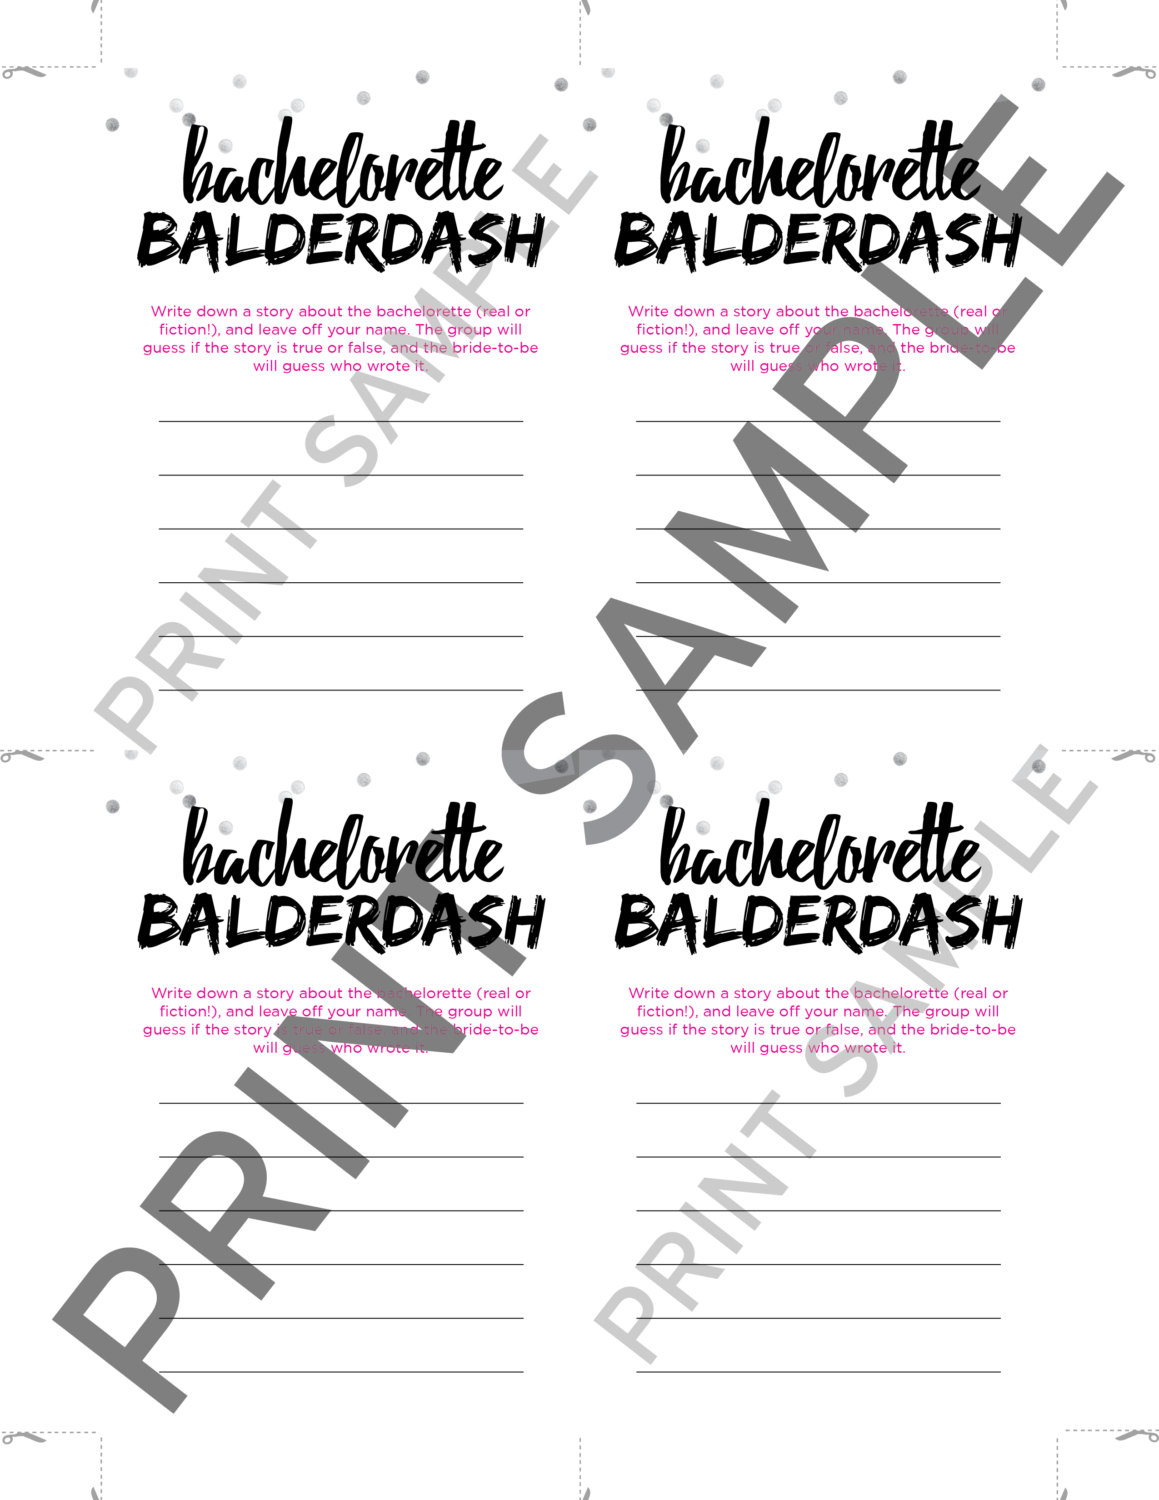 Fun Bachelorette Game - Bachelorette Balderdash Mini Cards and Sign